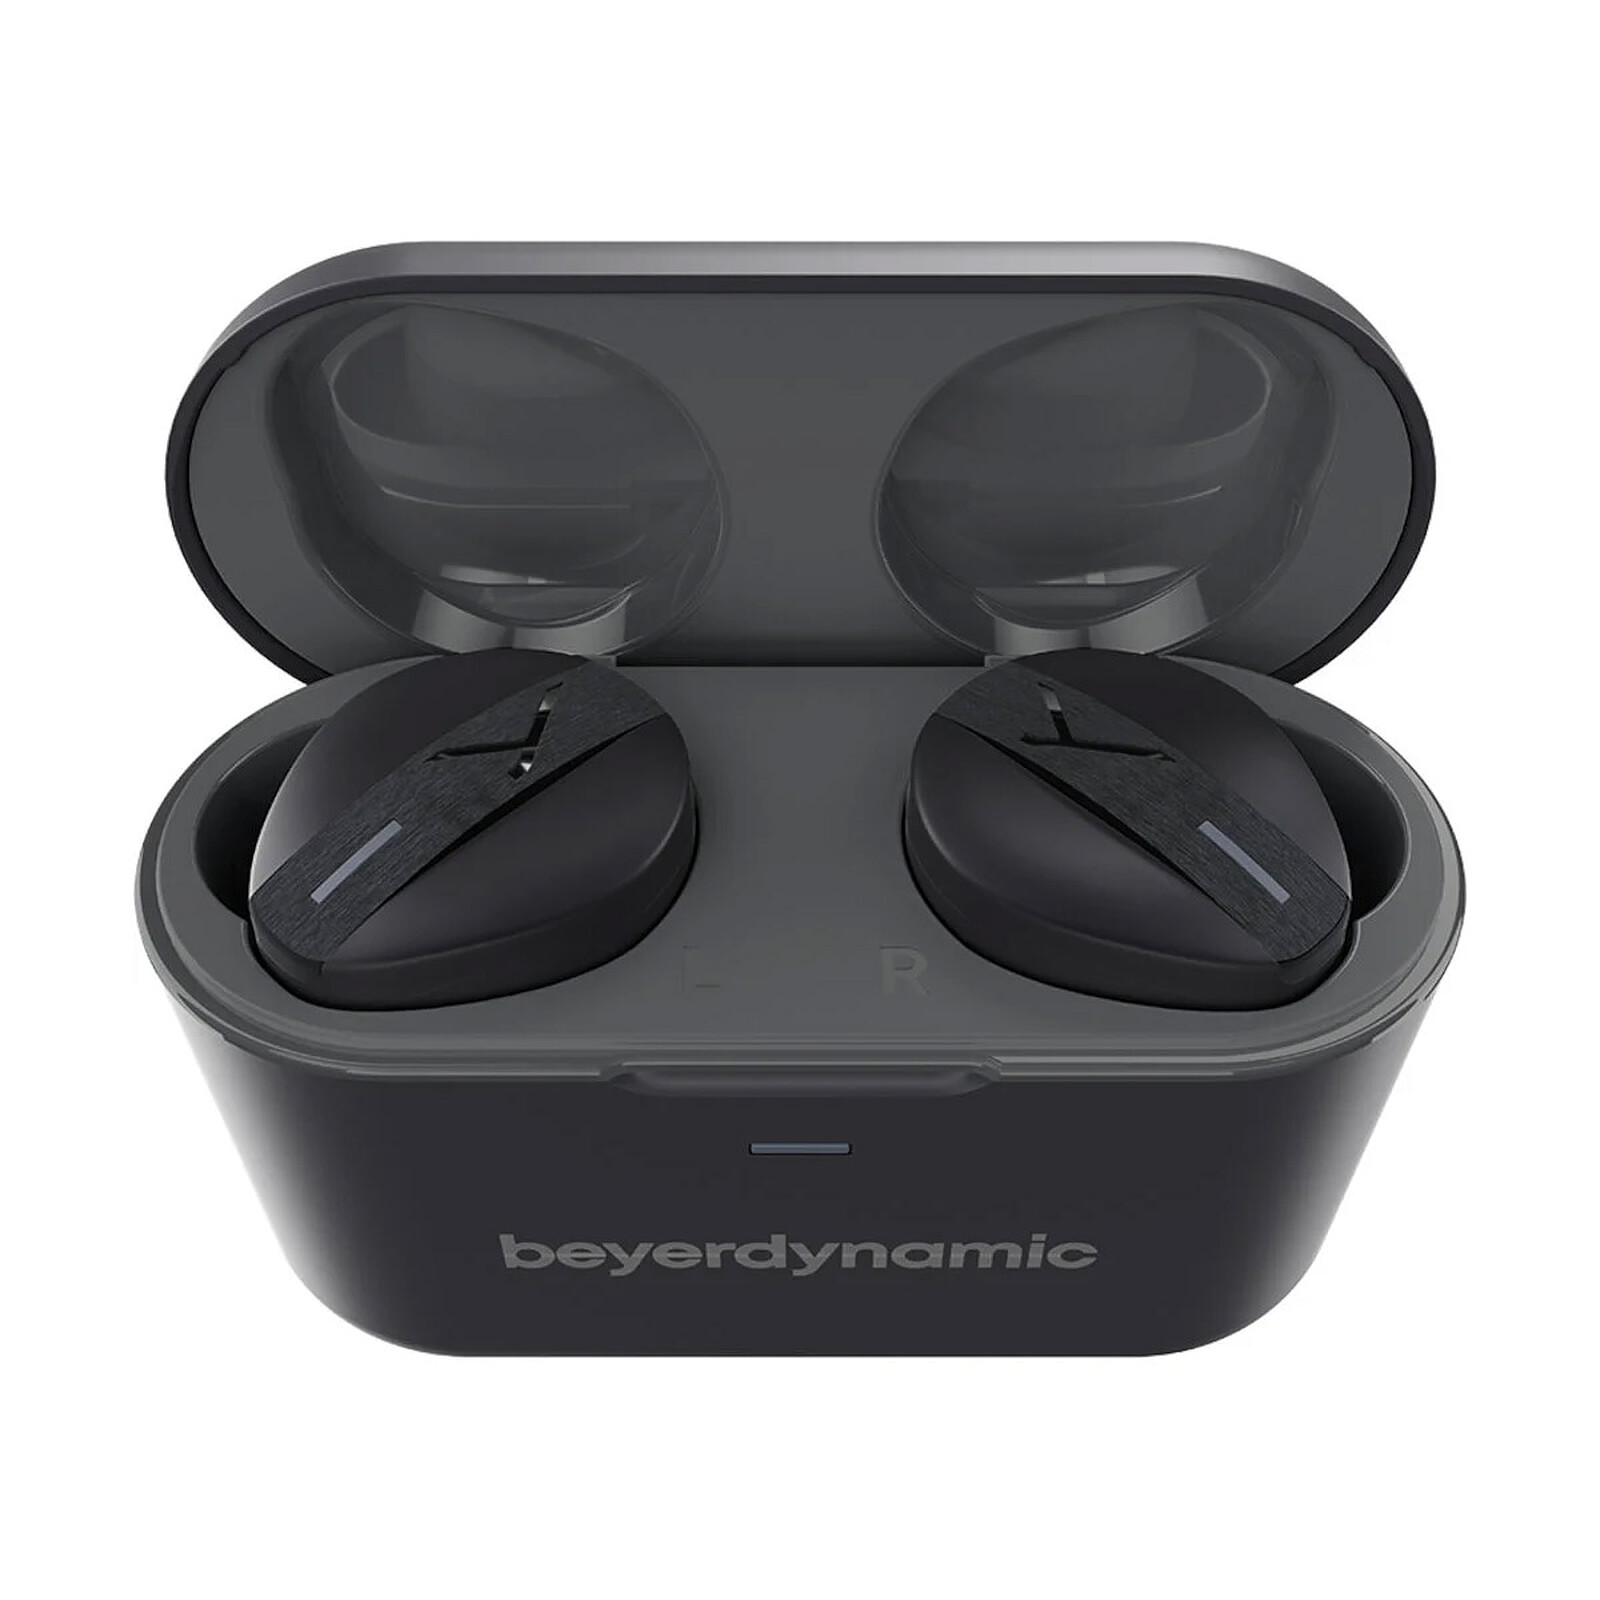 Beyerdynamic Free BYRD Black - Headphones - LDLC 3-year warranty